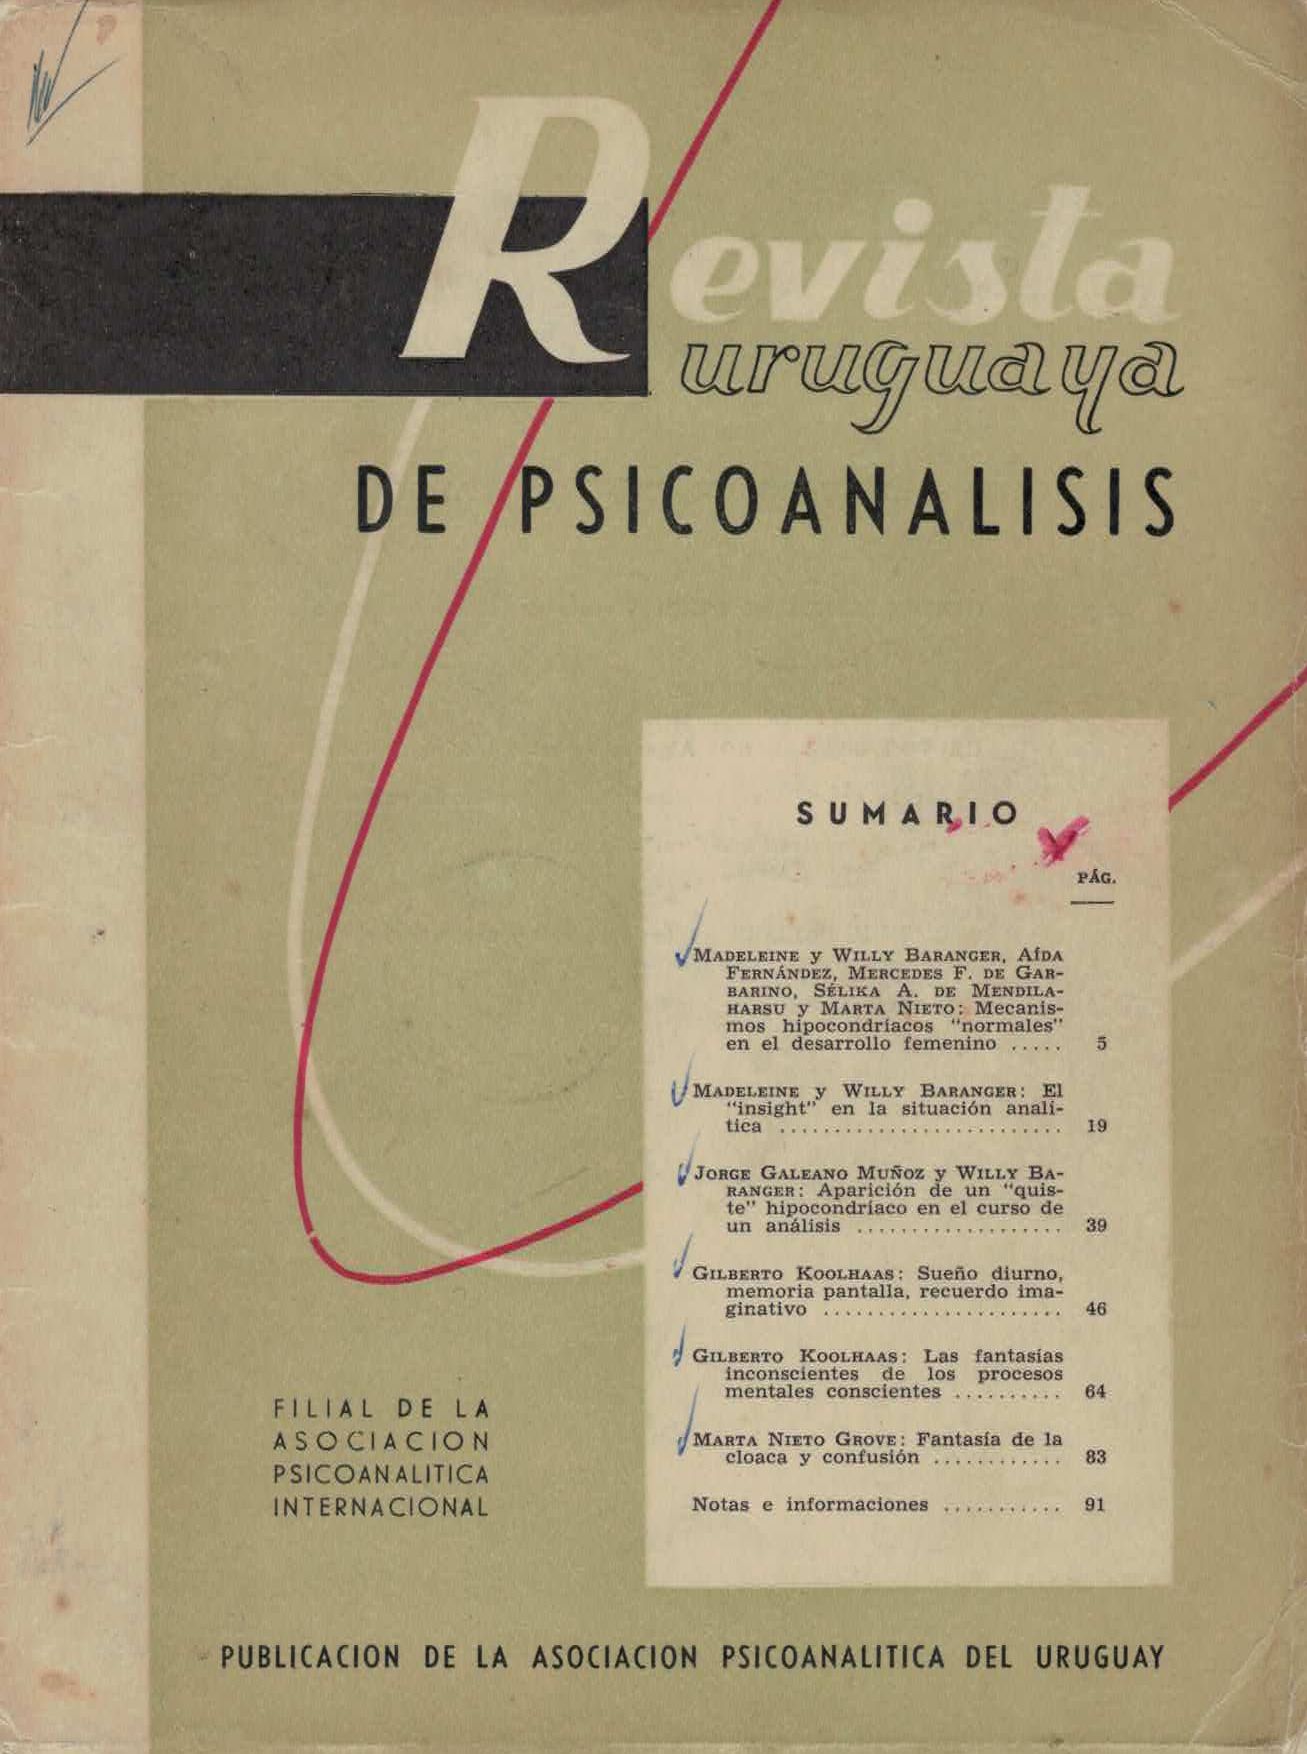 					Ver Vol. 6 Núm. 1 (1964): Revista Uruguaya de Psicoanálisis
				